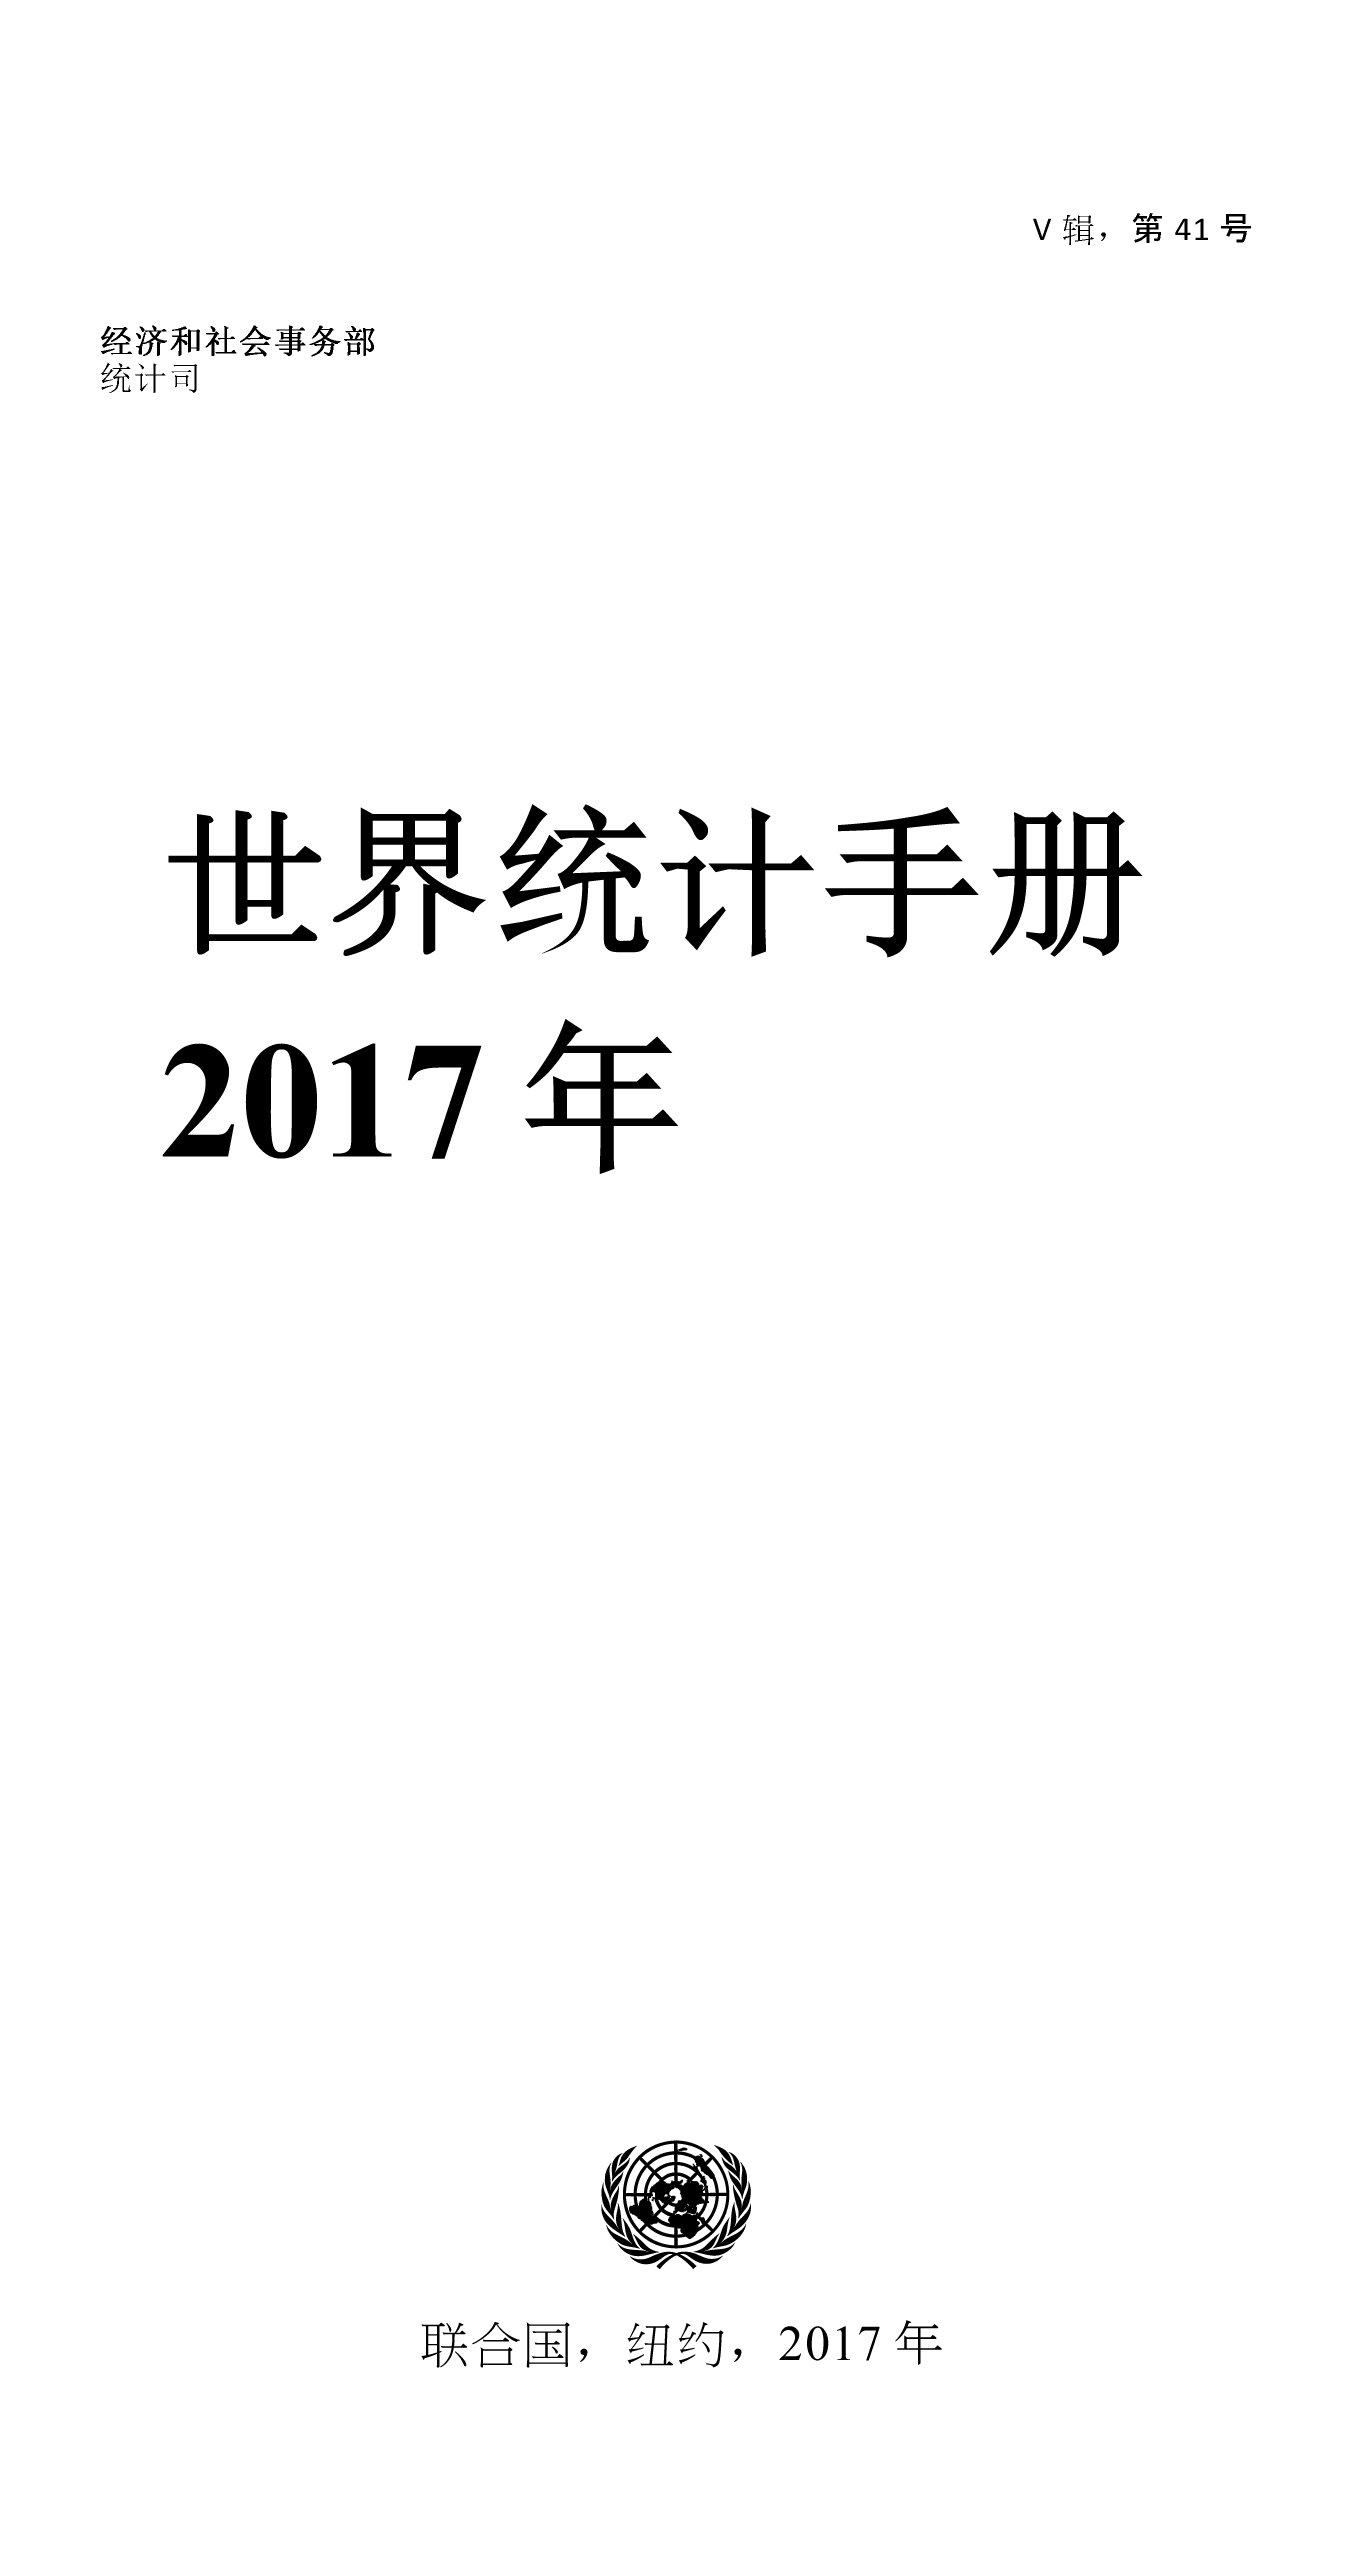 image of 2017 年世界统计手册